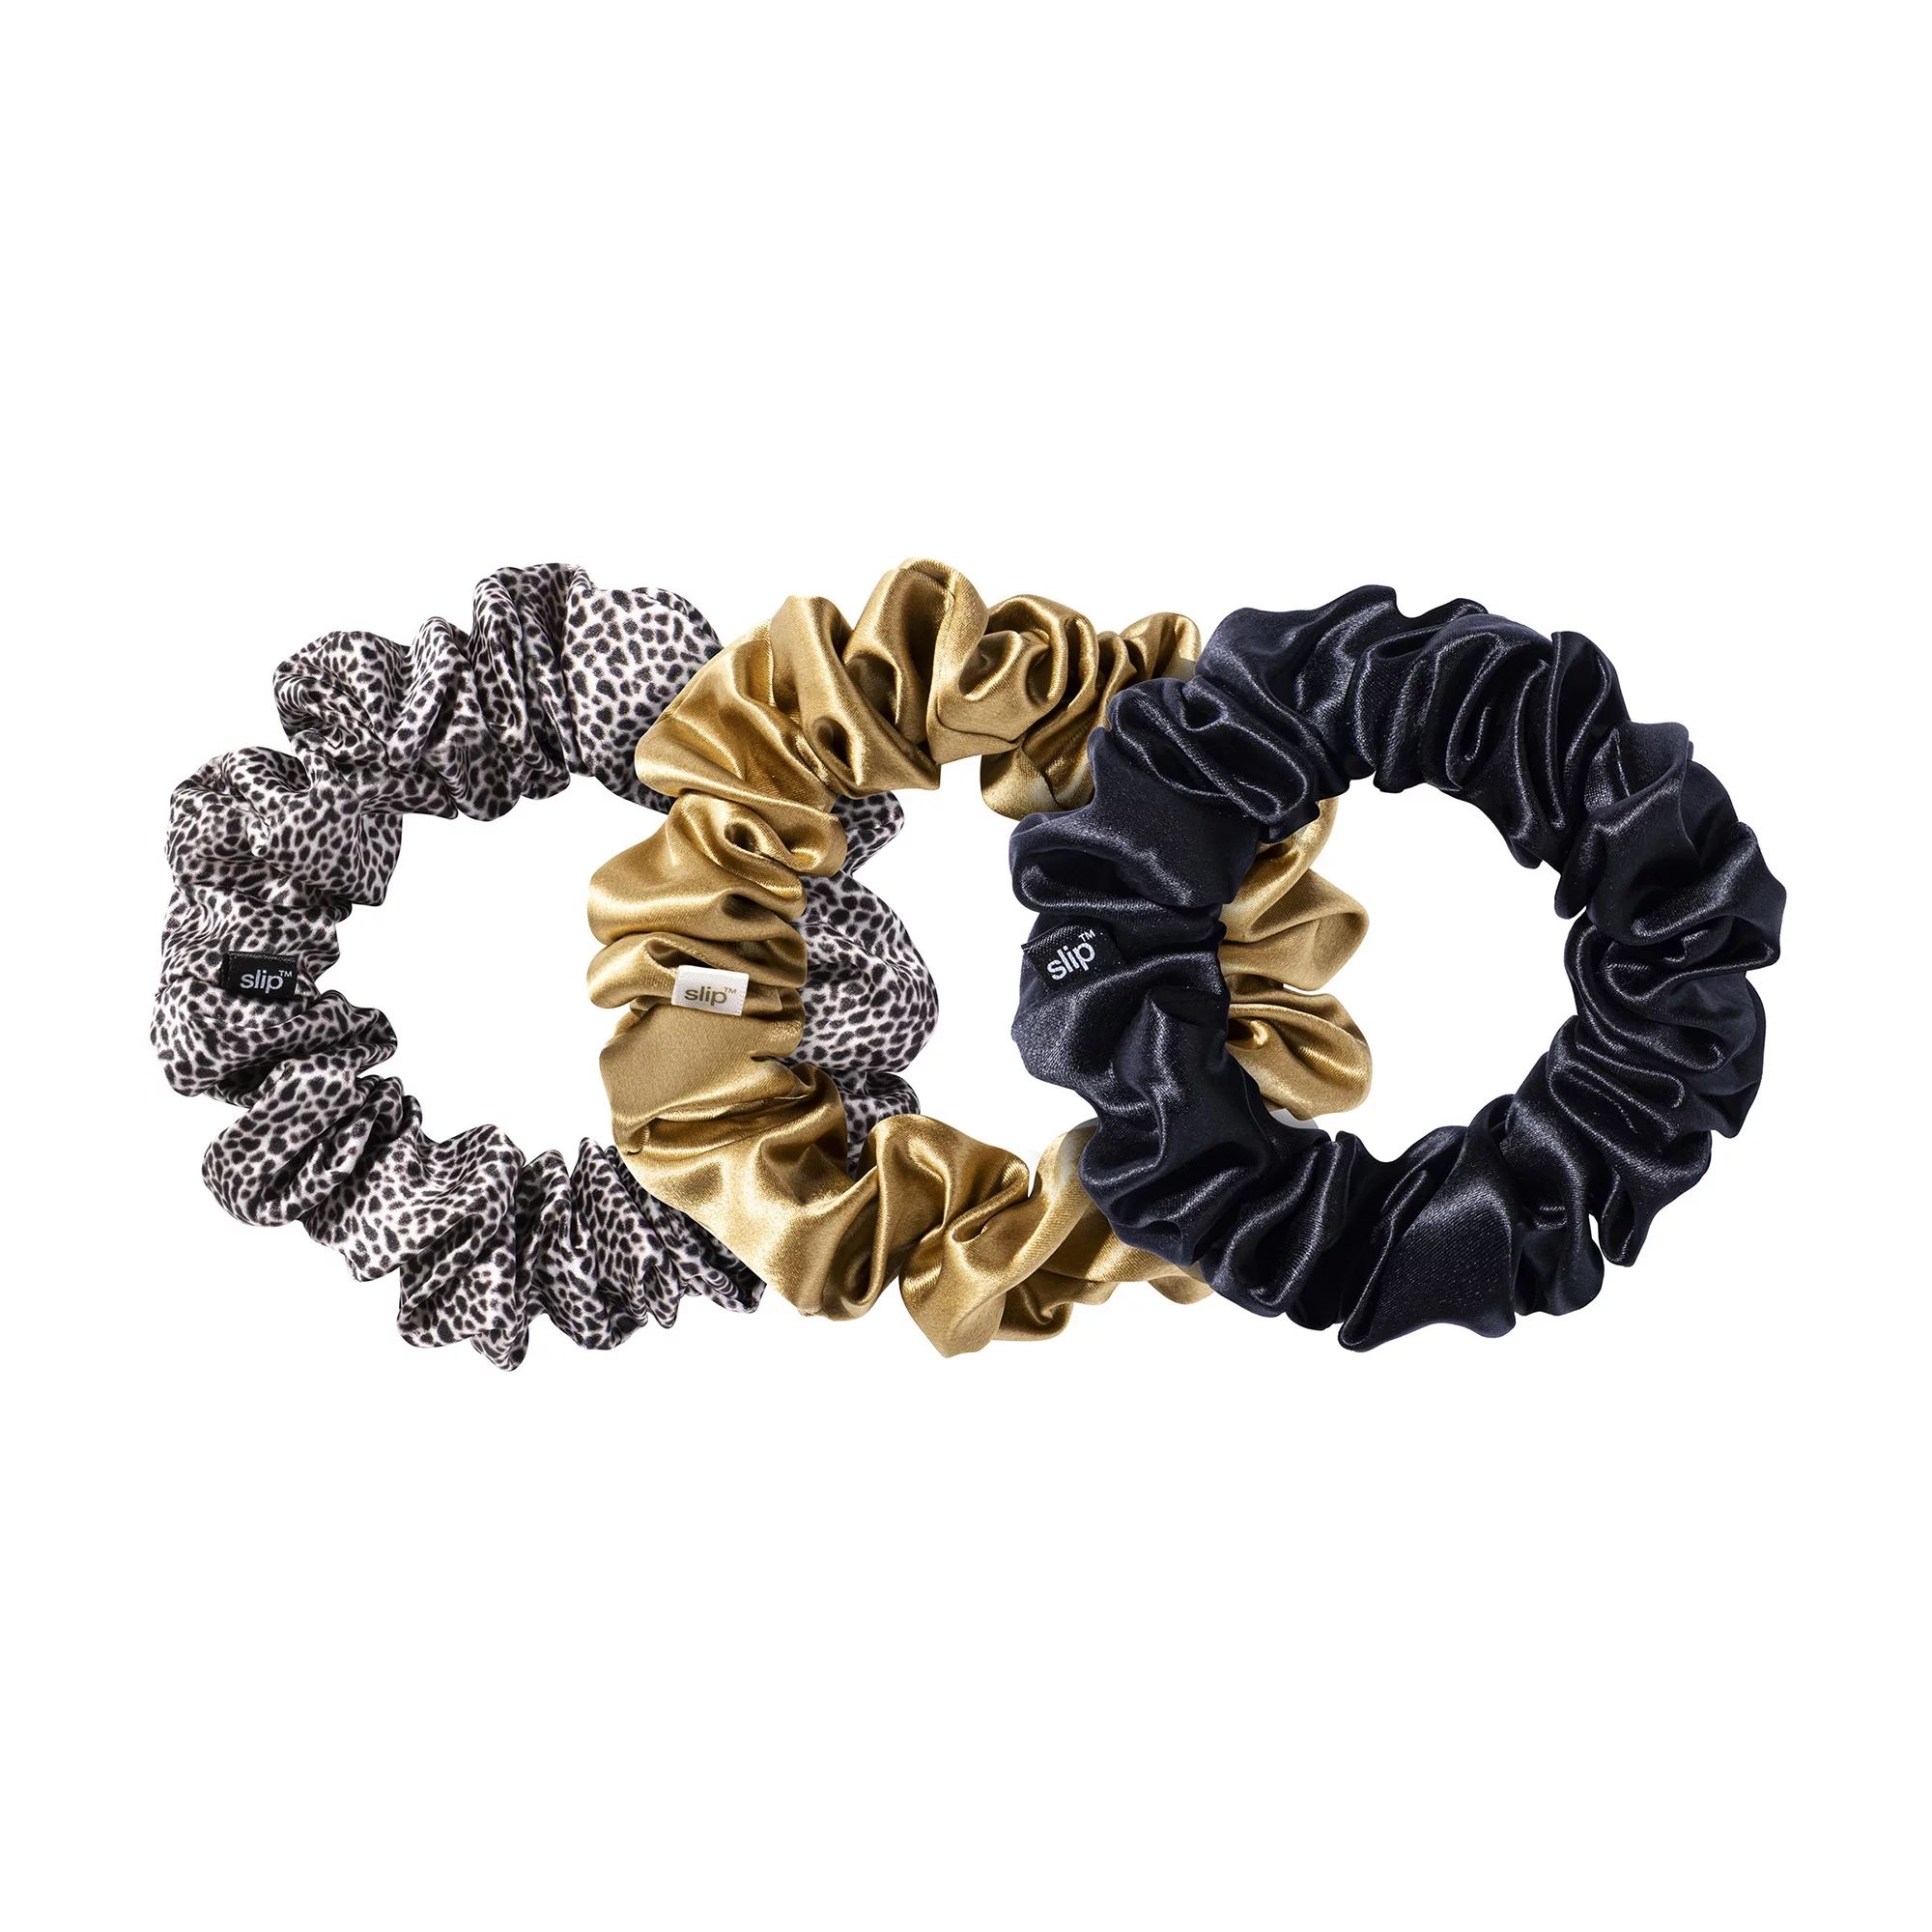 Slip Pure Silk Mixed Leopard Scrunchies Hair Tie, Assorted Colors, 3 ct | Walmart (US)